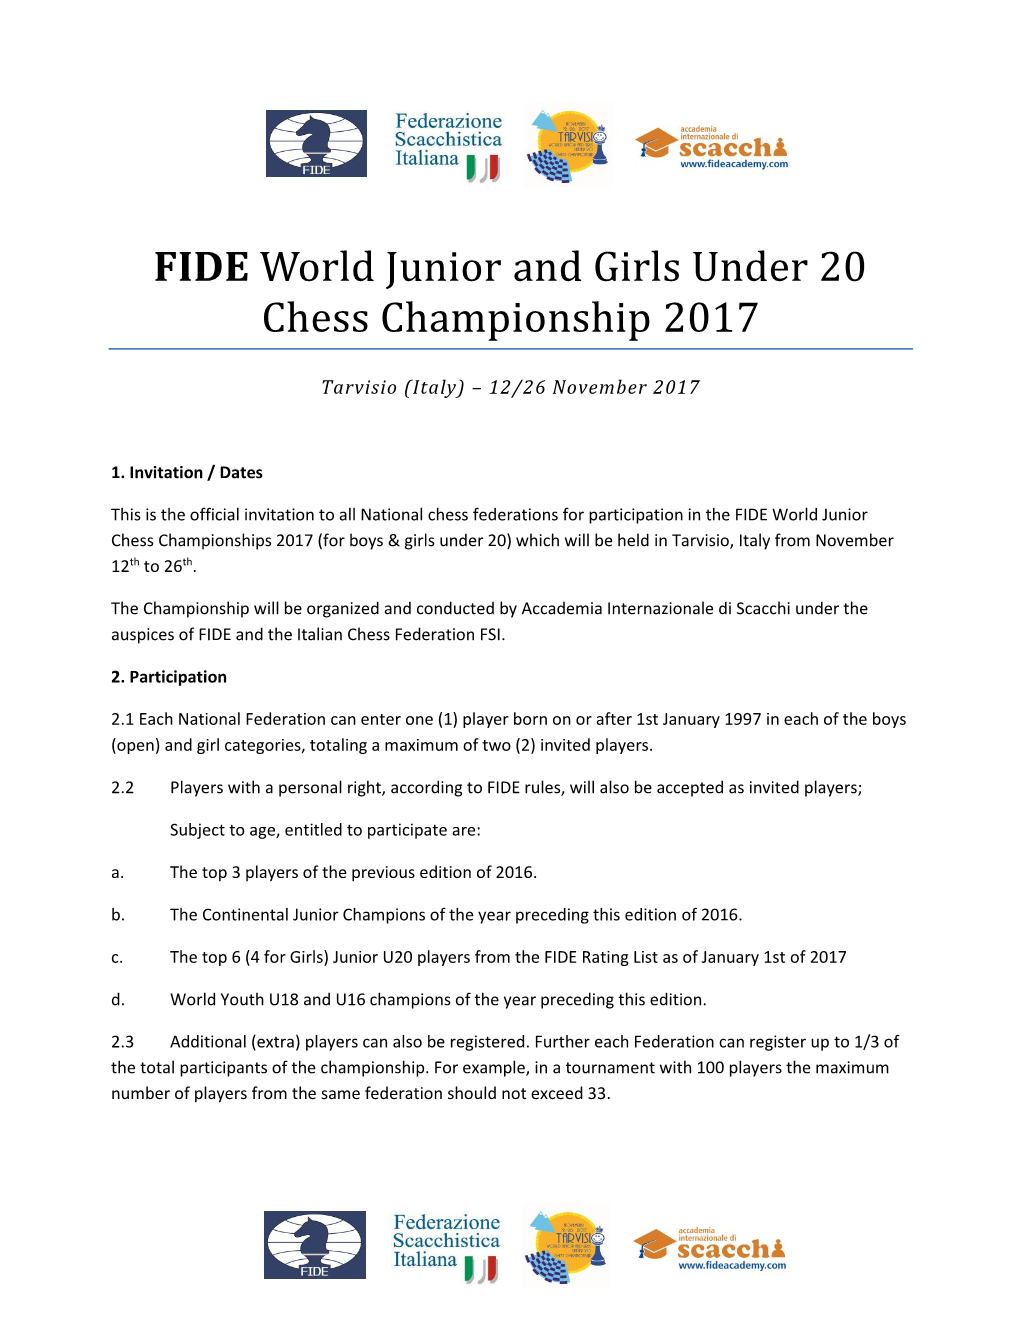 FIDE World Junior and Girls Under 20 Chess Championship 2017